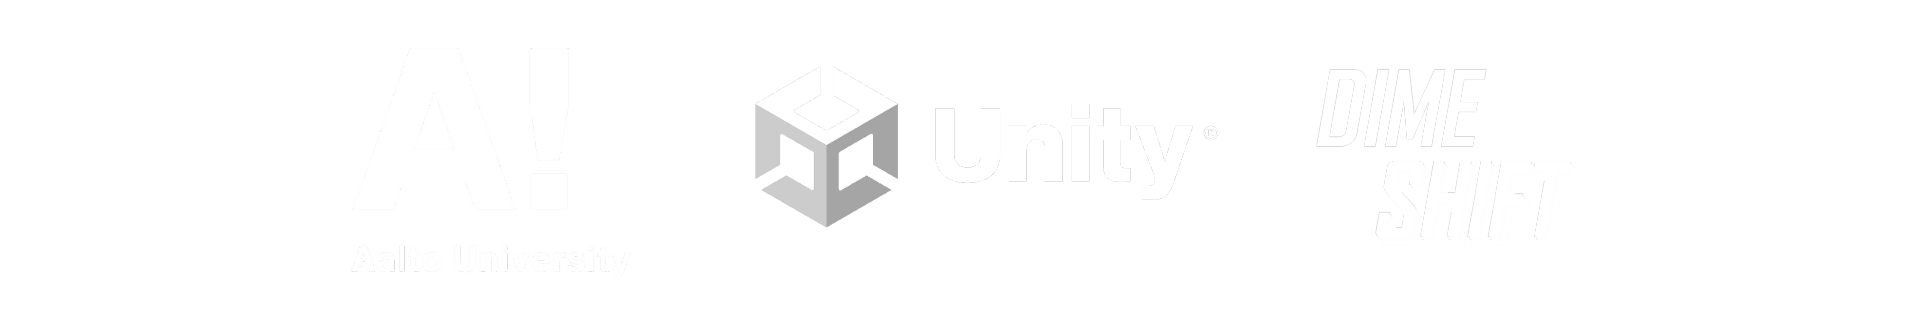 Logo of Aalto University, Unity and Dime Shift